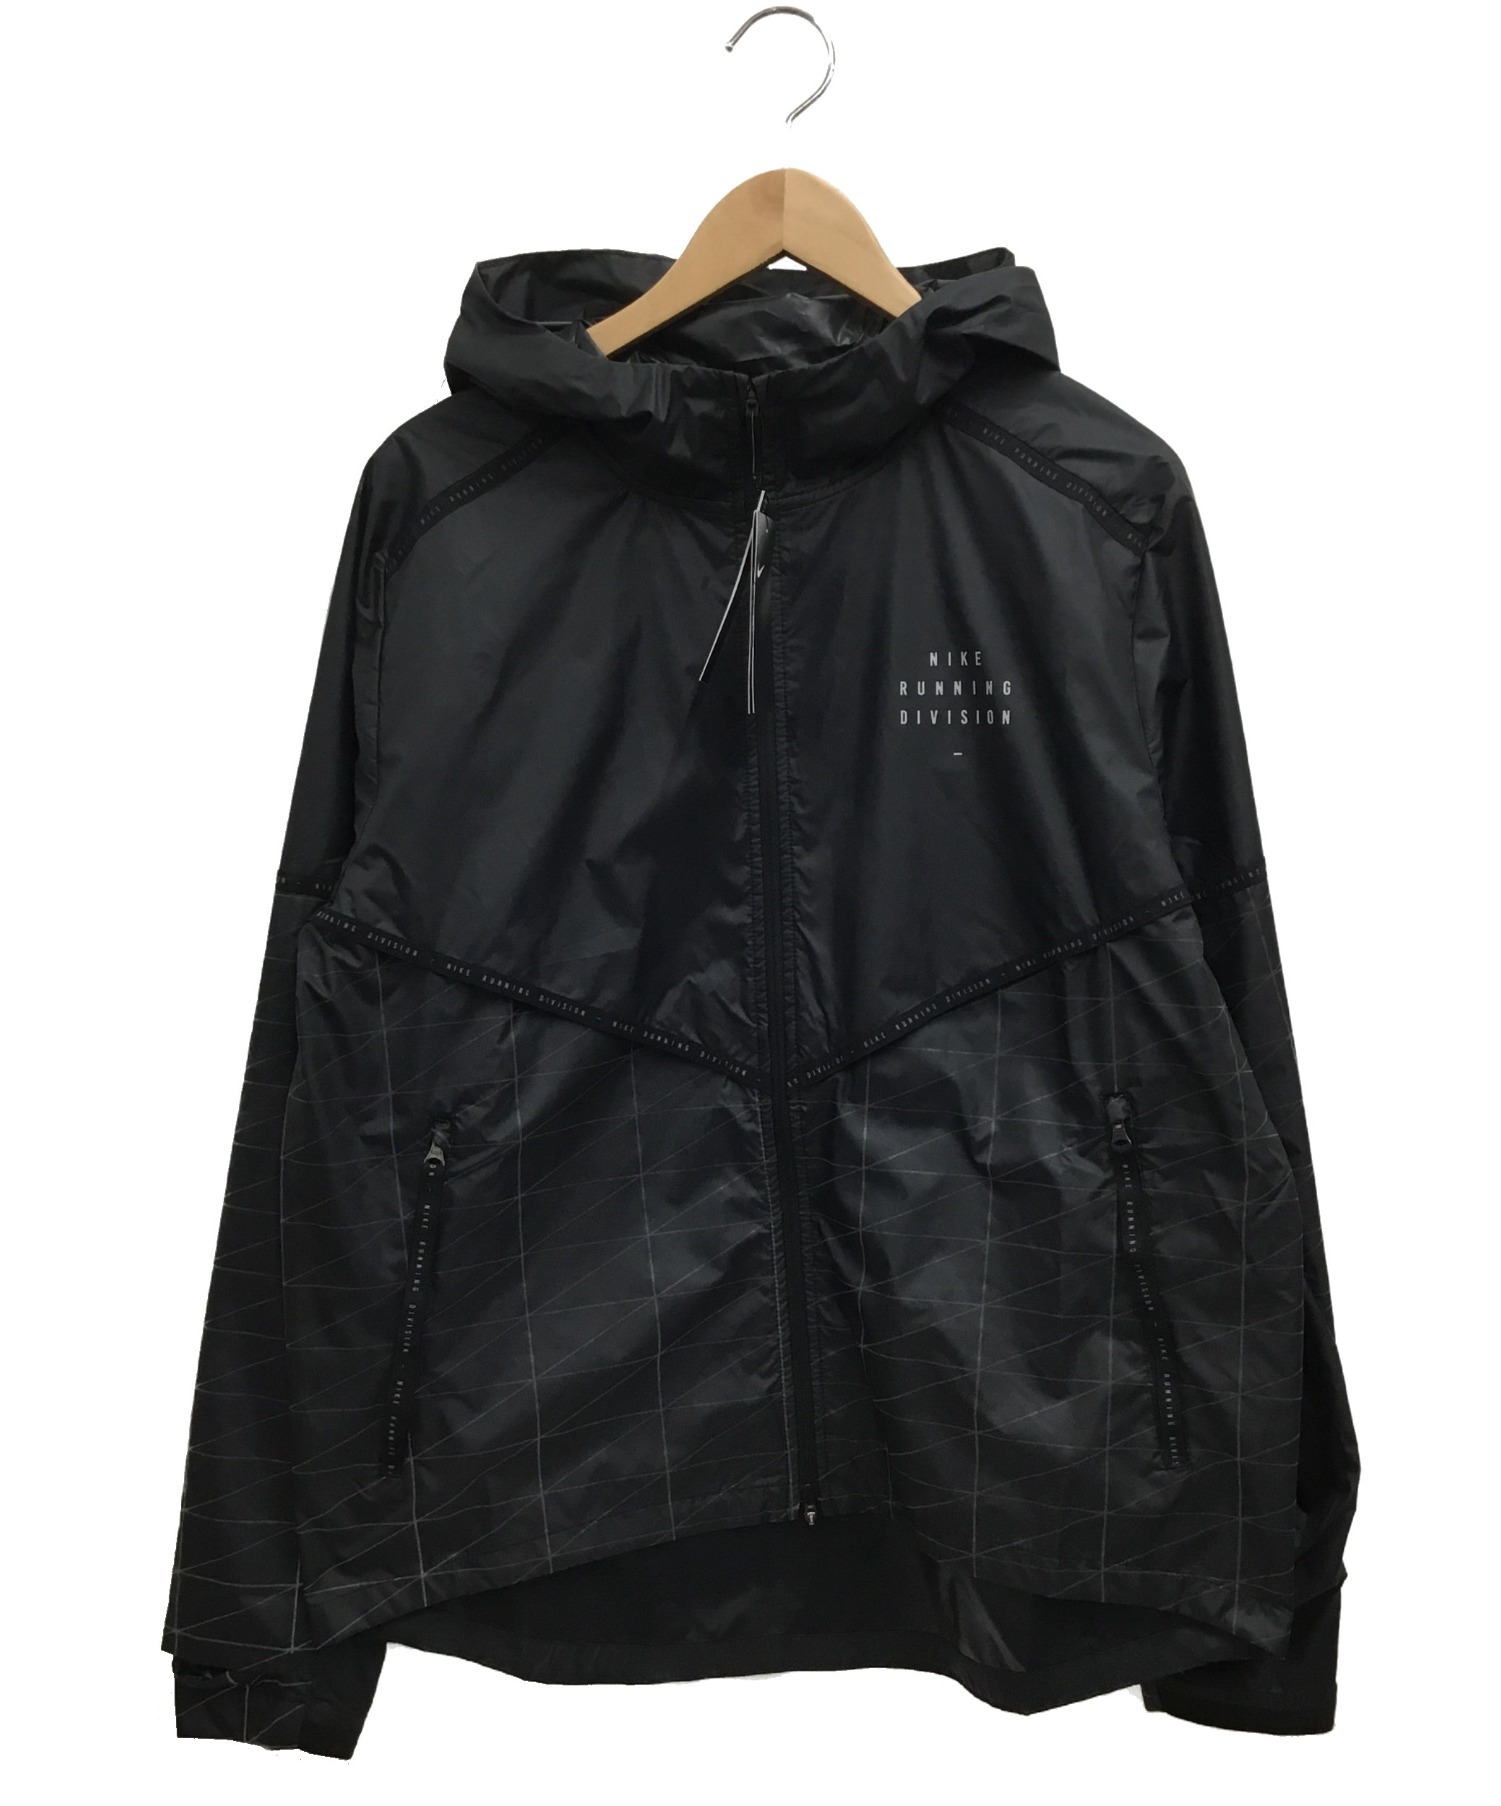 NIKE (ナイキ) ランニングジャケット ブラック サイズ:L